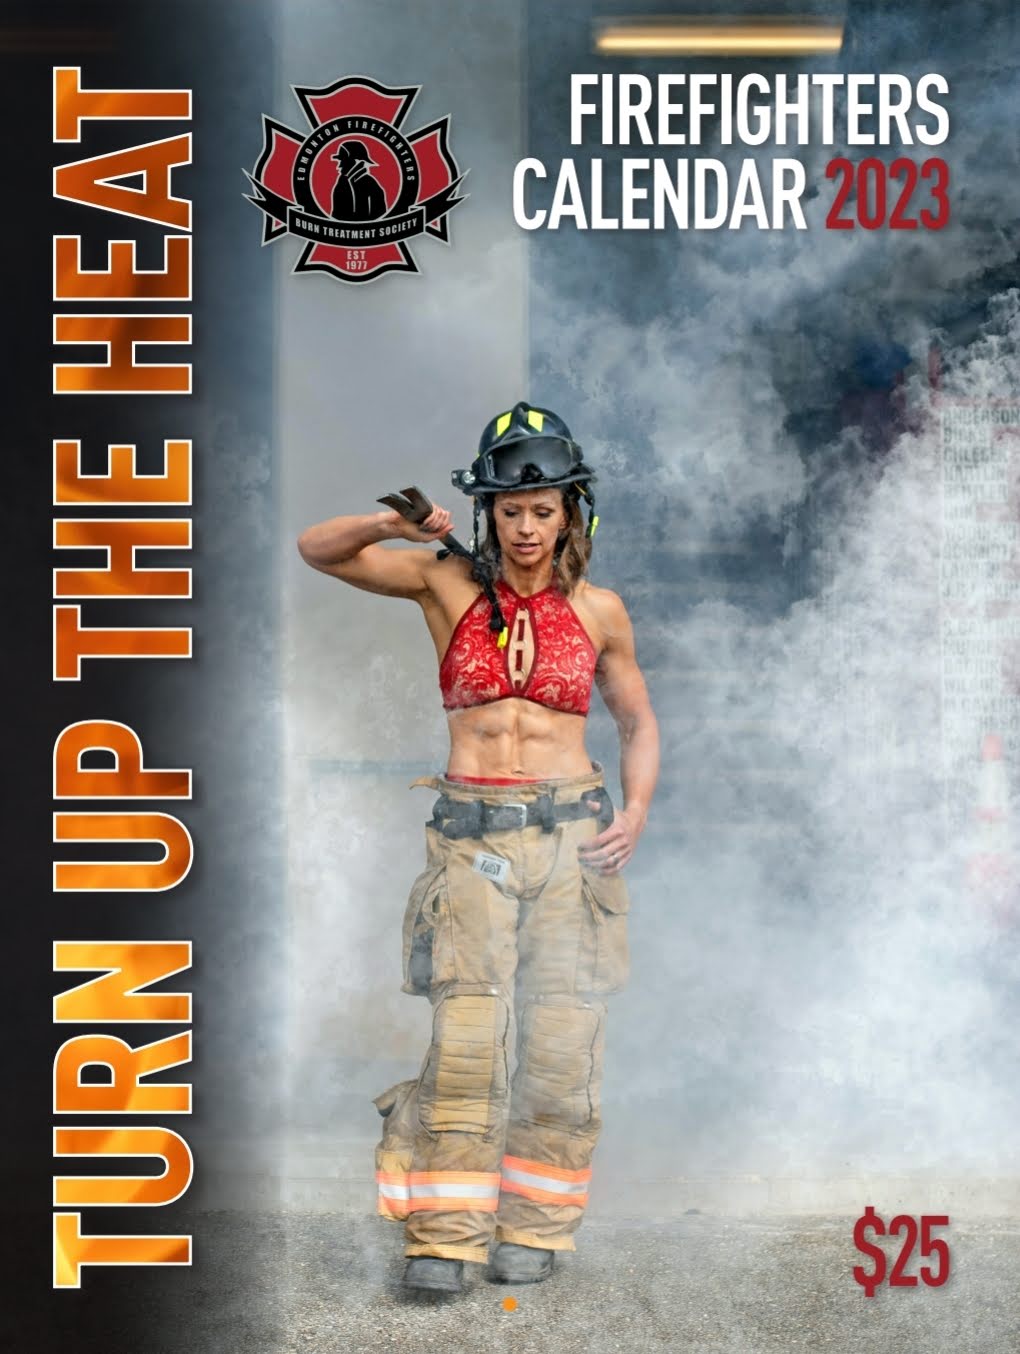 EFBTS’ Turn Up The Heat 2023 Calendar is HERE!